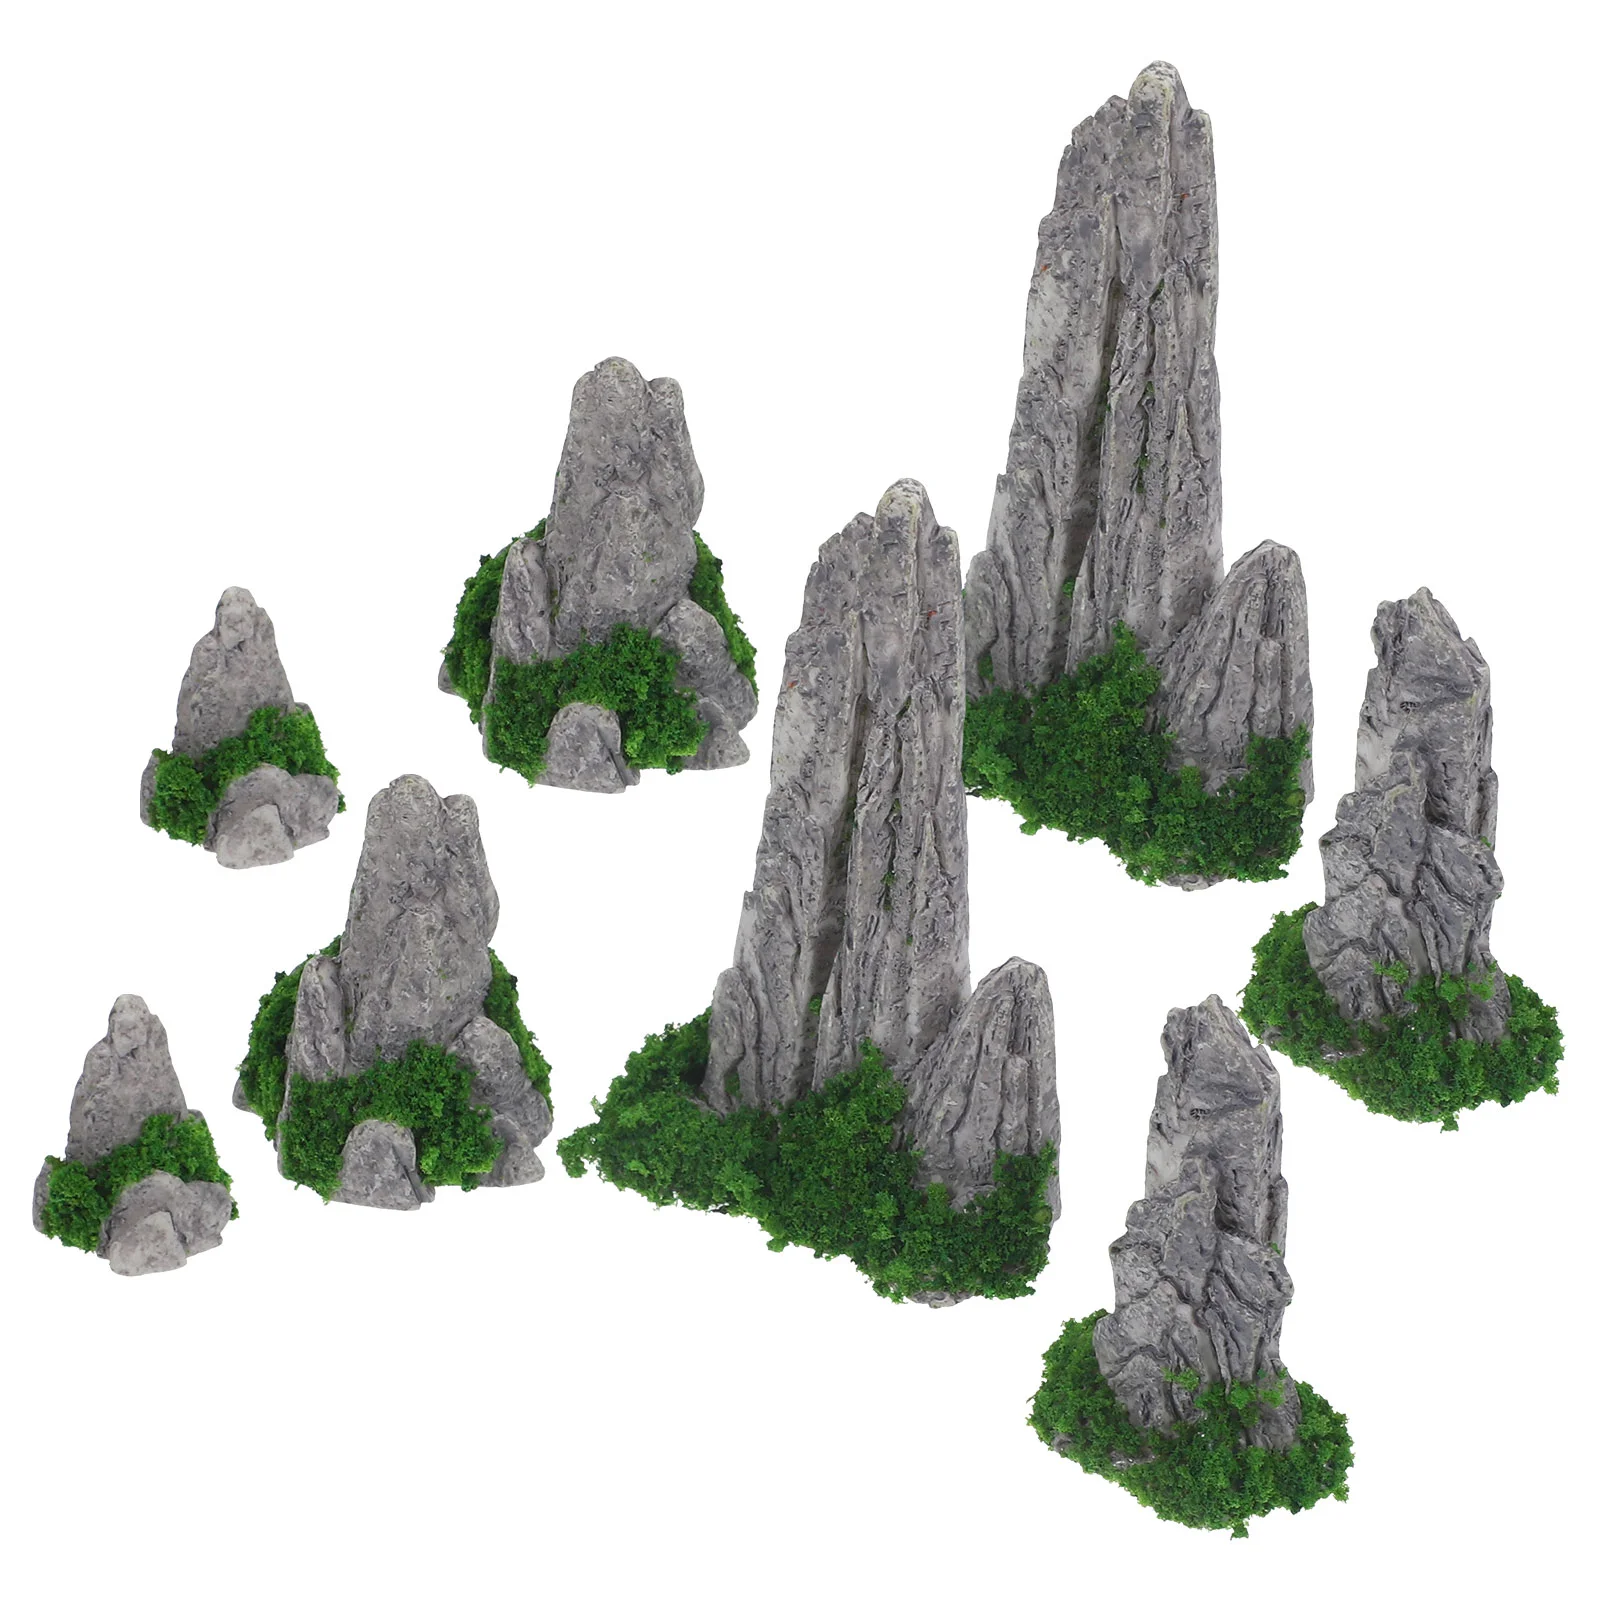 

Miniature Rockery Decorative Rockery Figurines Resin Rockery Statues Outdoor Garden Ornament Small Micro Simulation Rockery